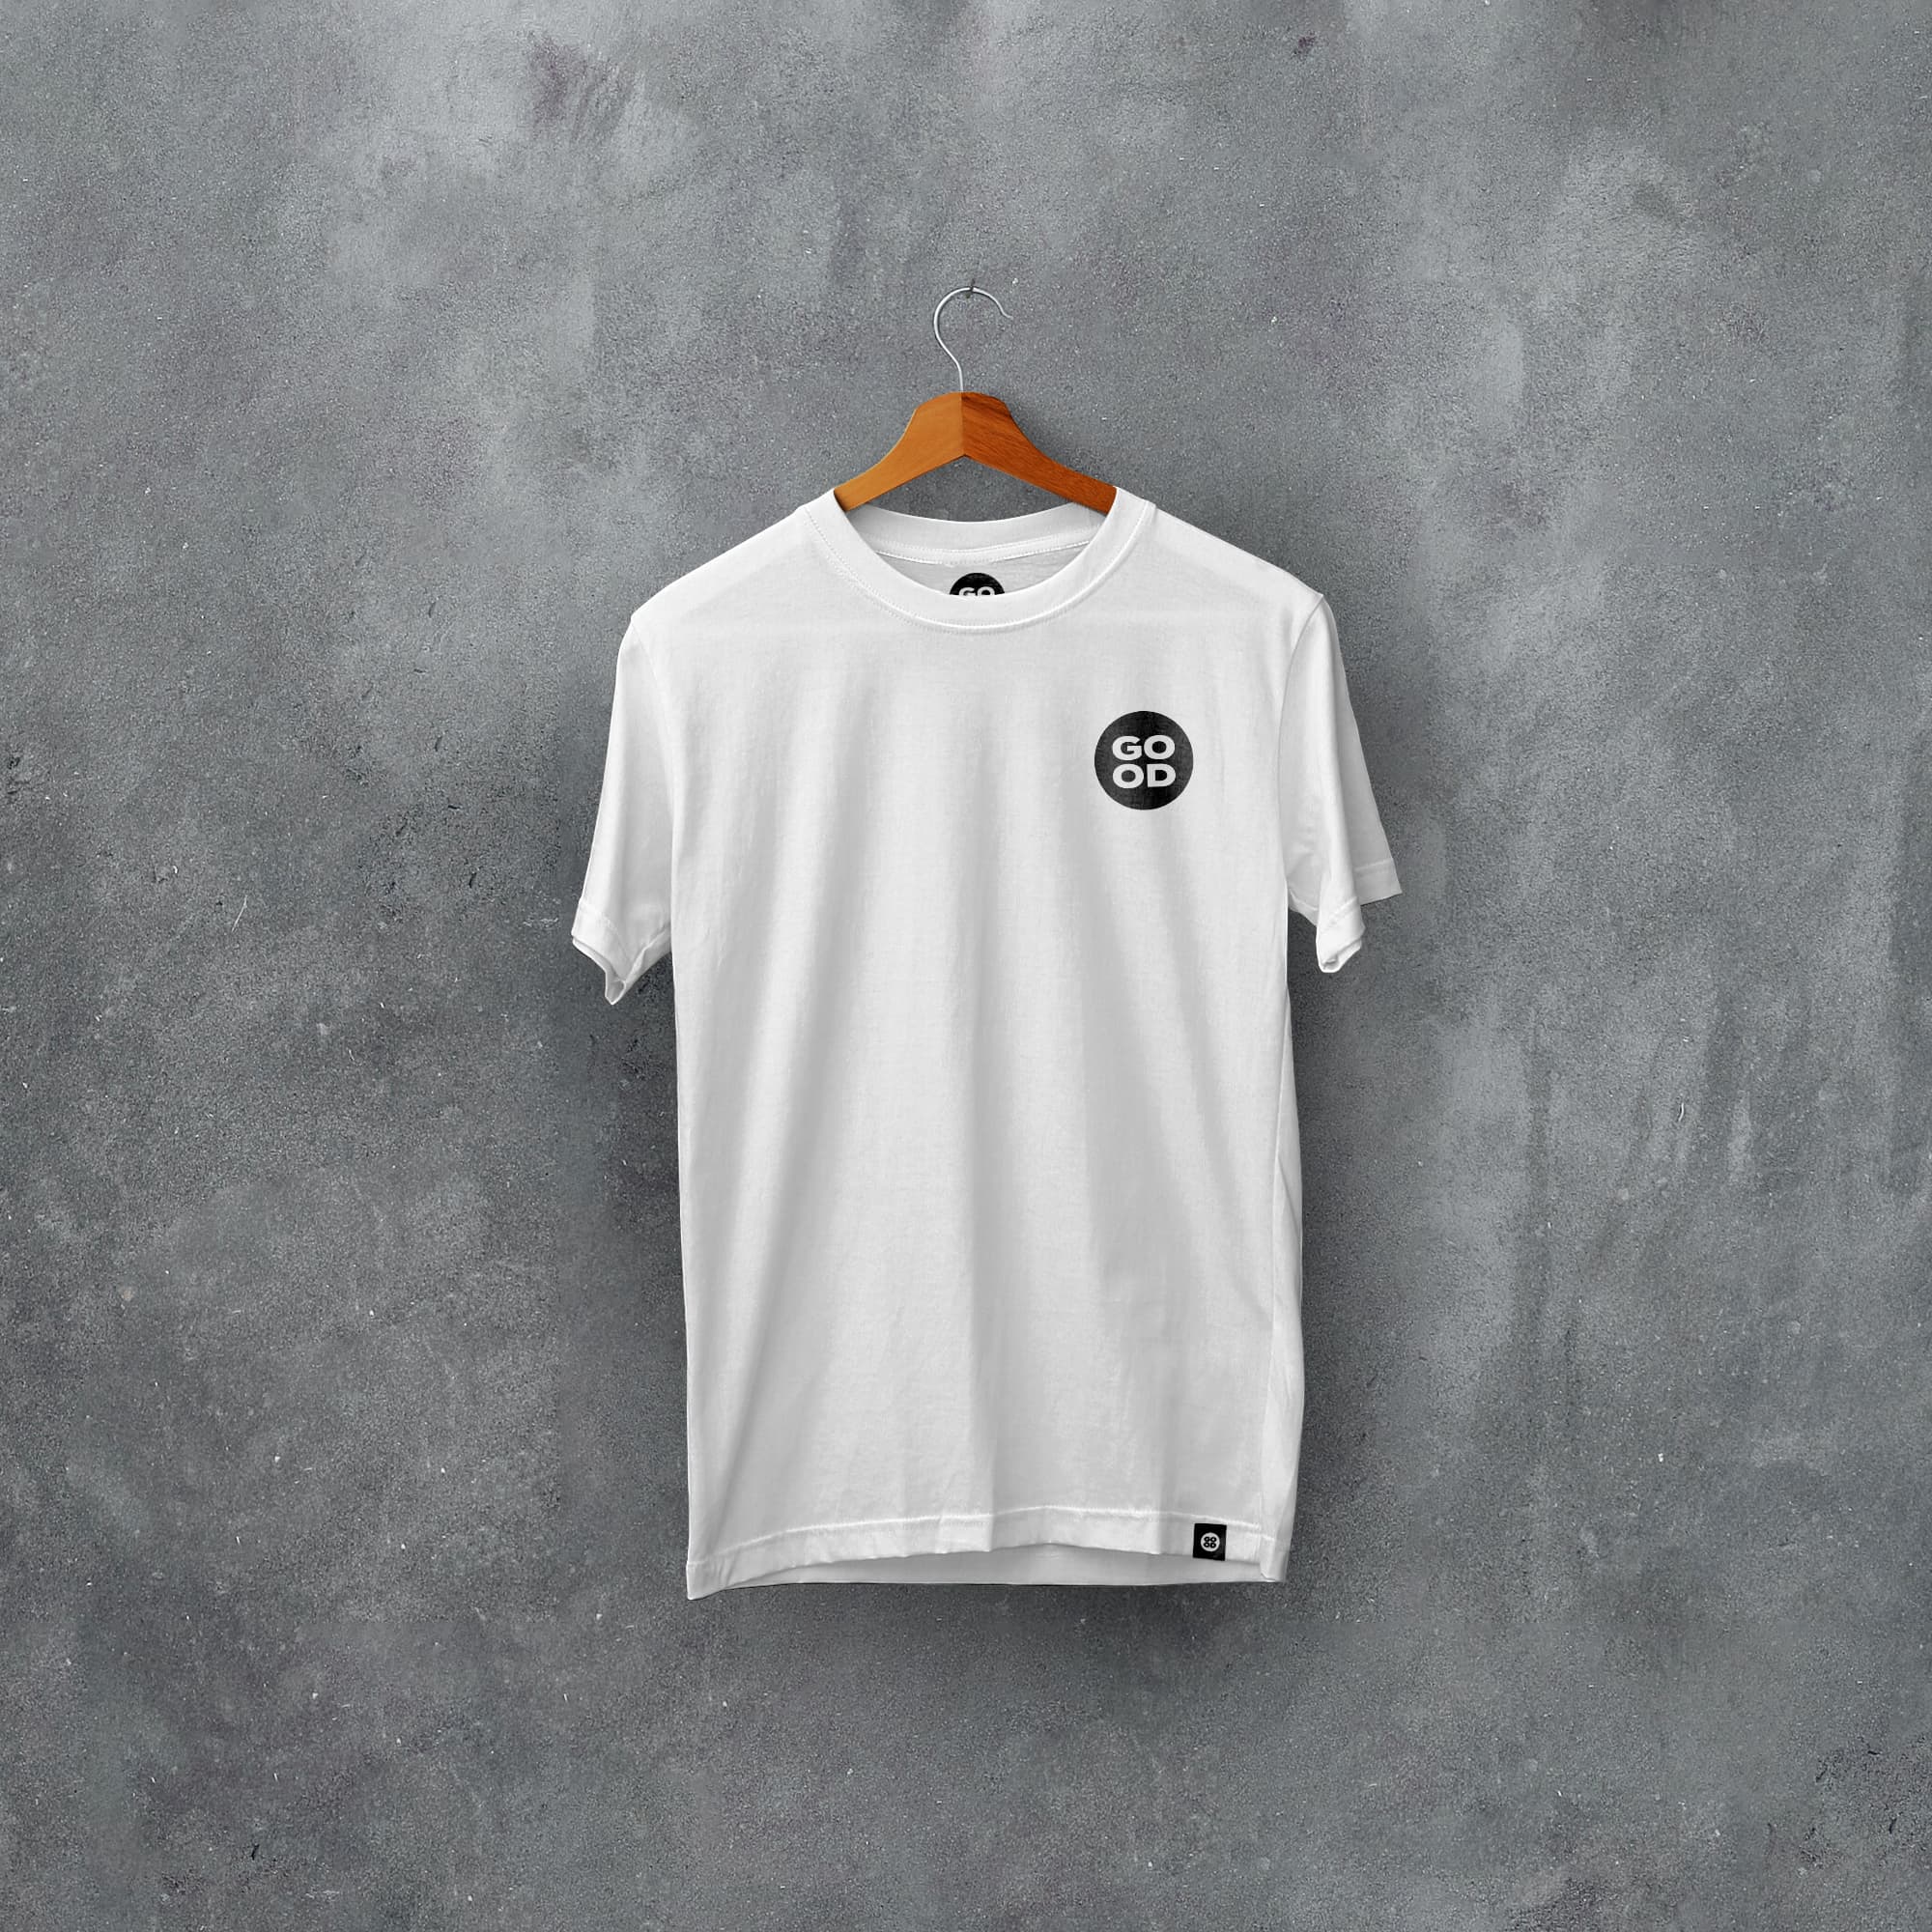 Accrington Classic Kits Football T-Shirt